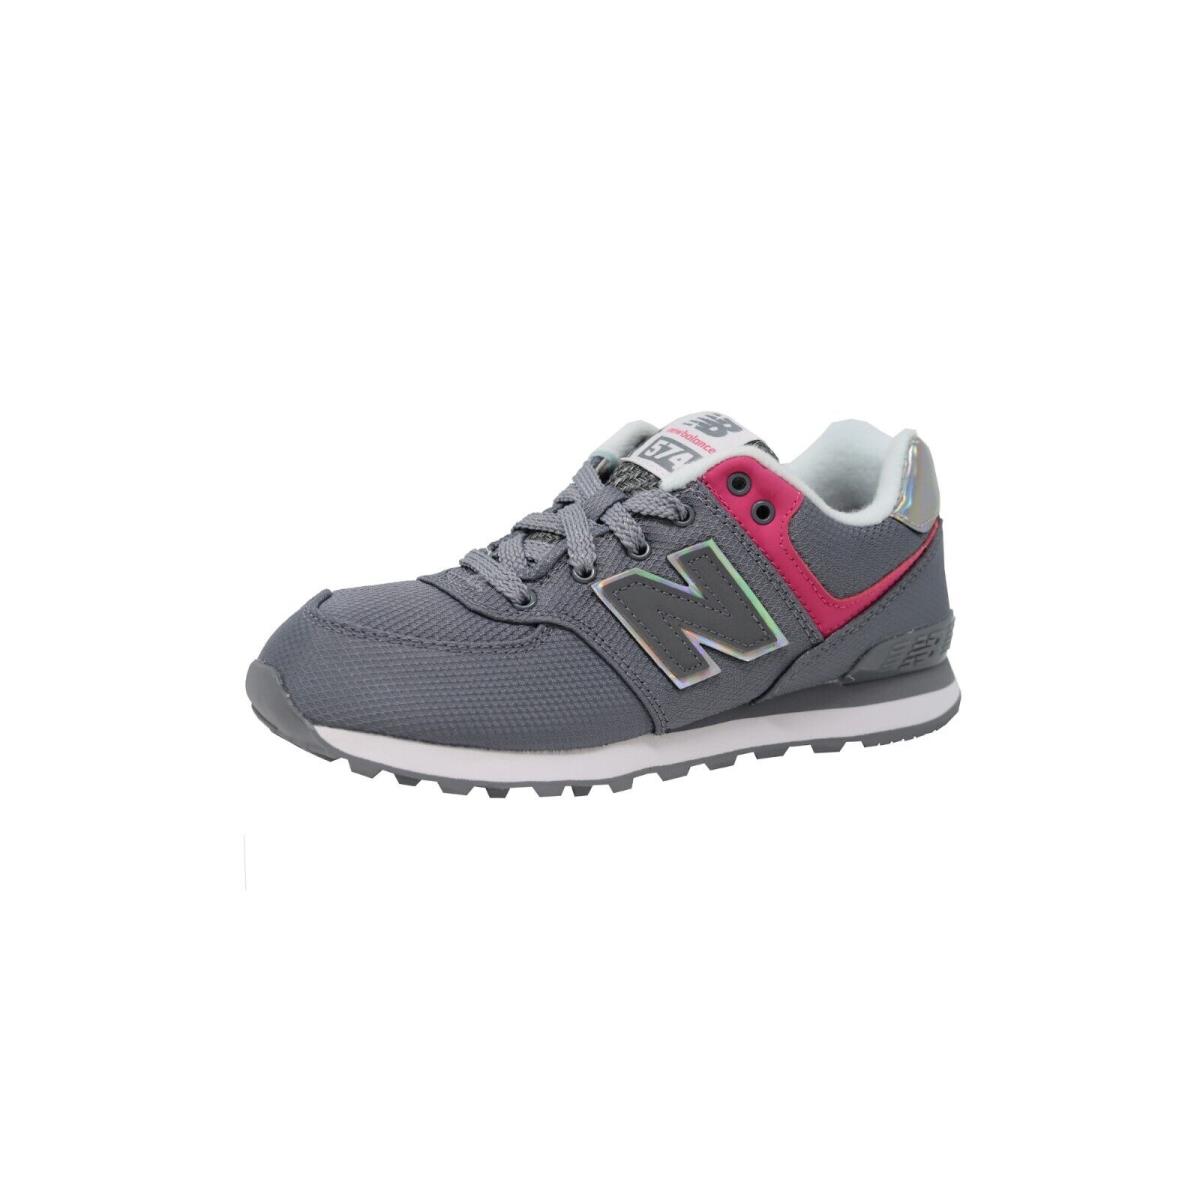 New Balance Girls Little Kids Running Shoes Sneakers KL574J3P - Grey/pink